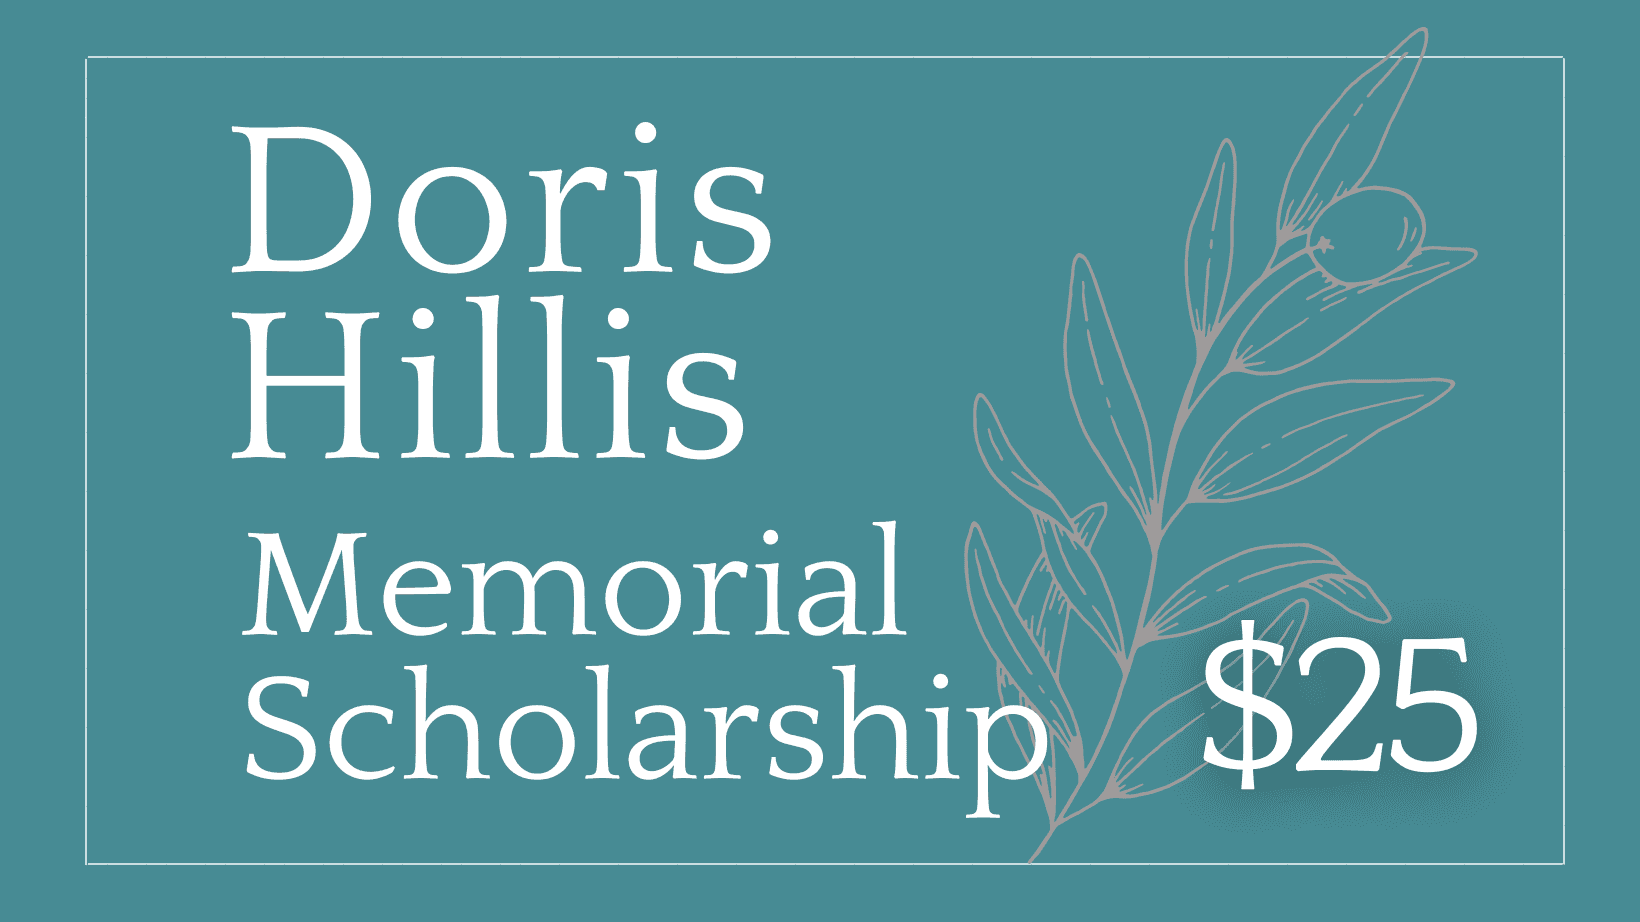 Doris Hillis Scholarship supporting image.